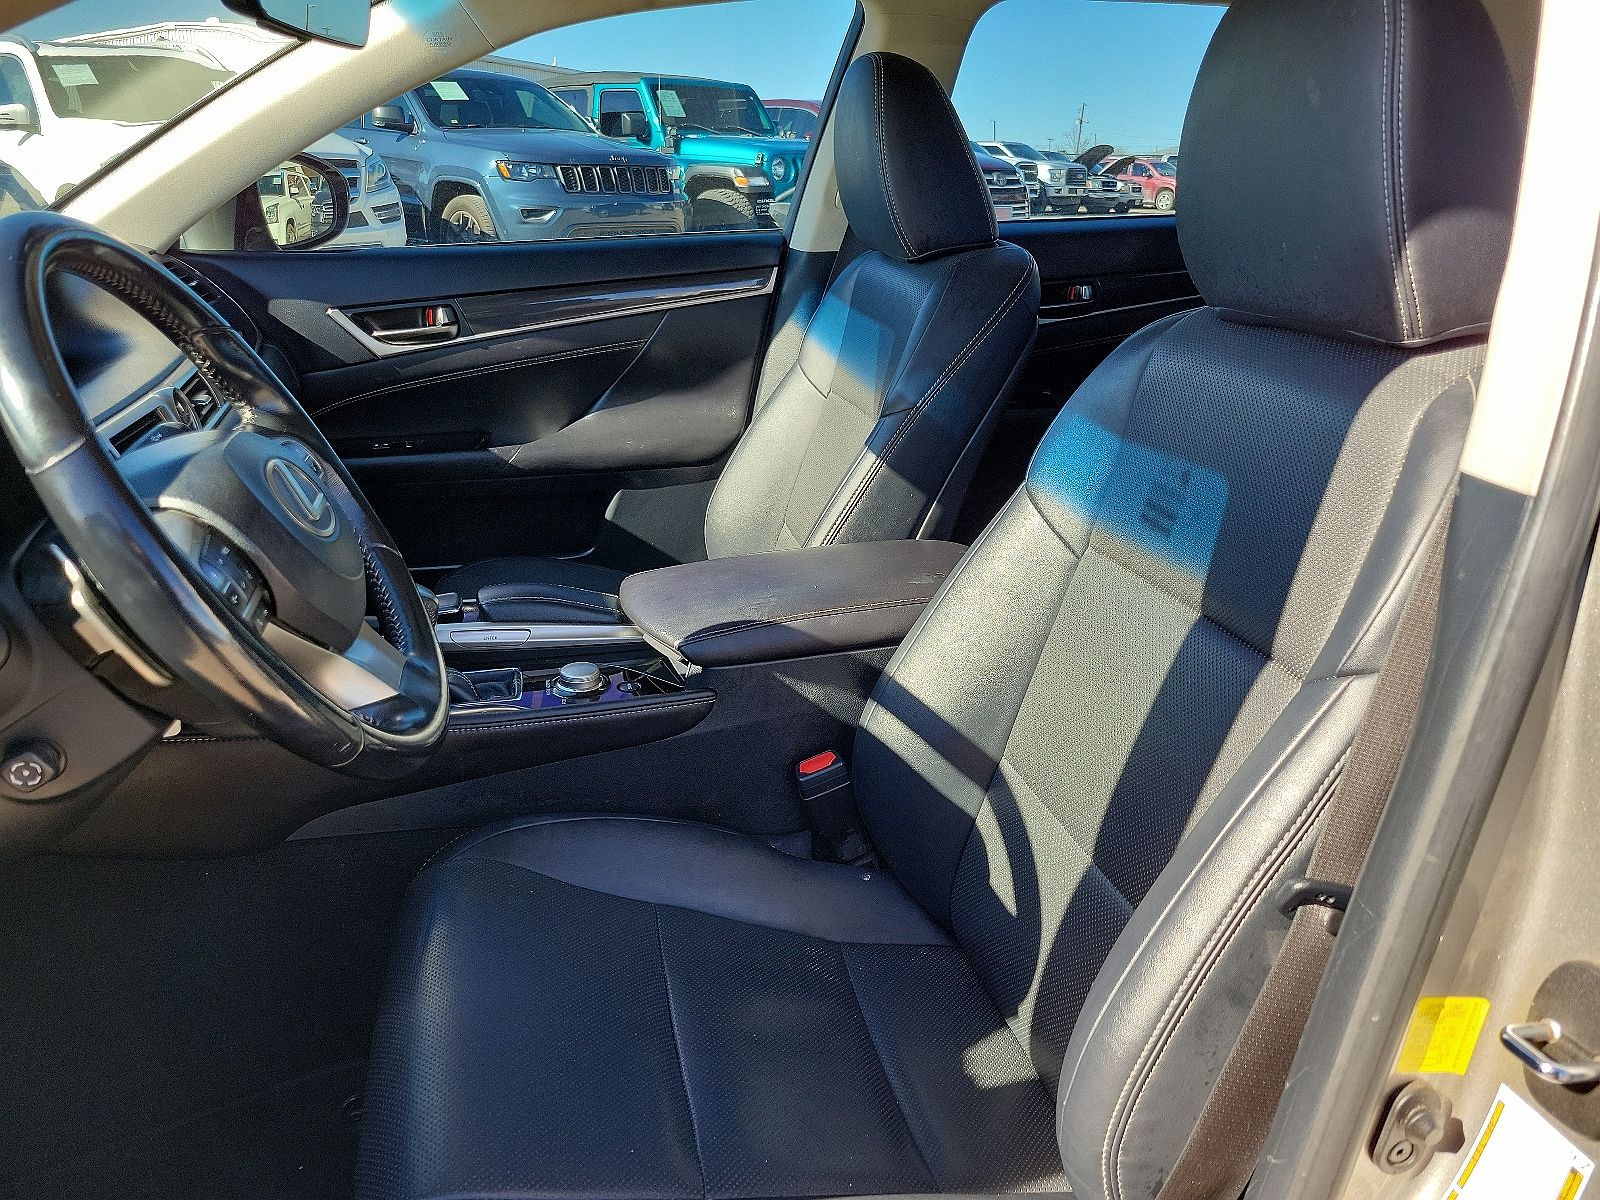 2016 Lexus GS 200t image 15